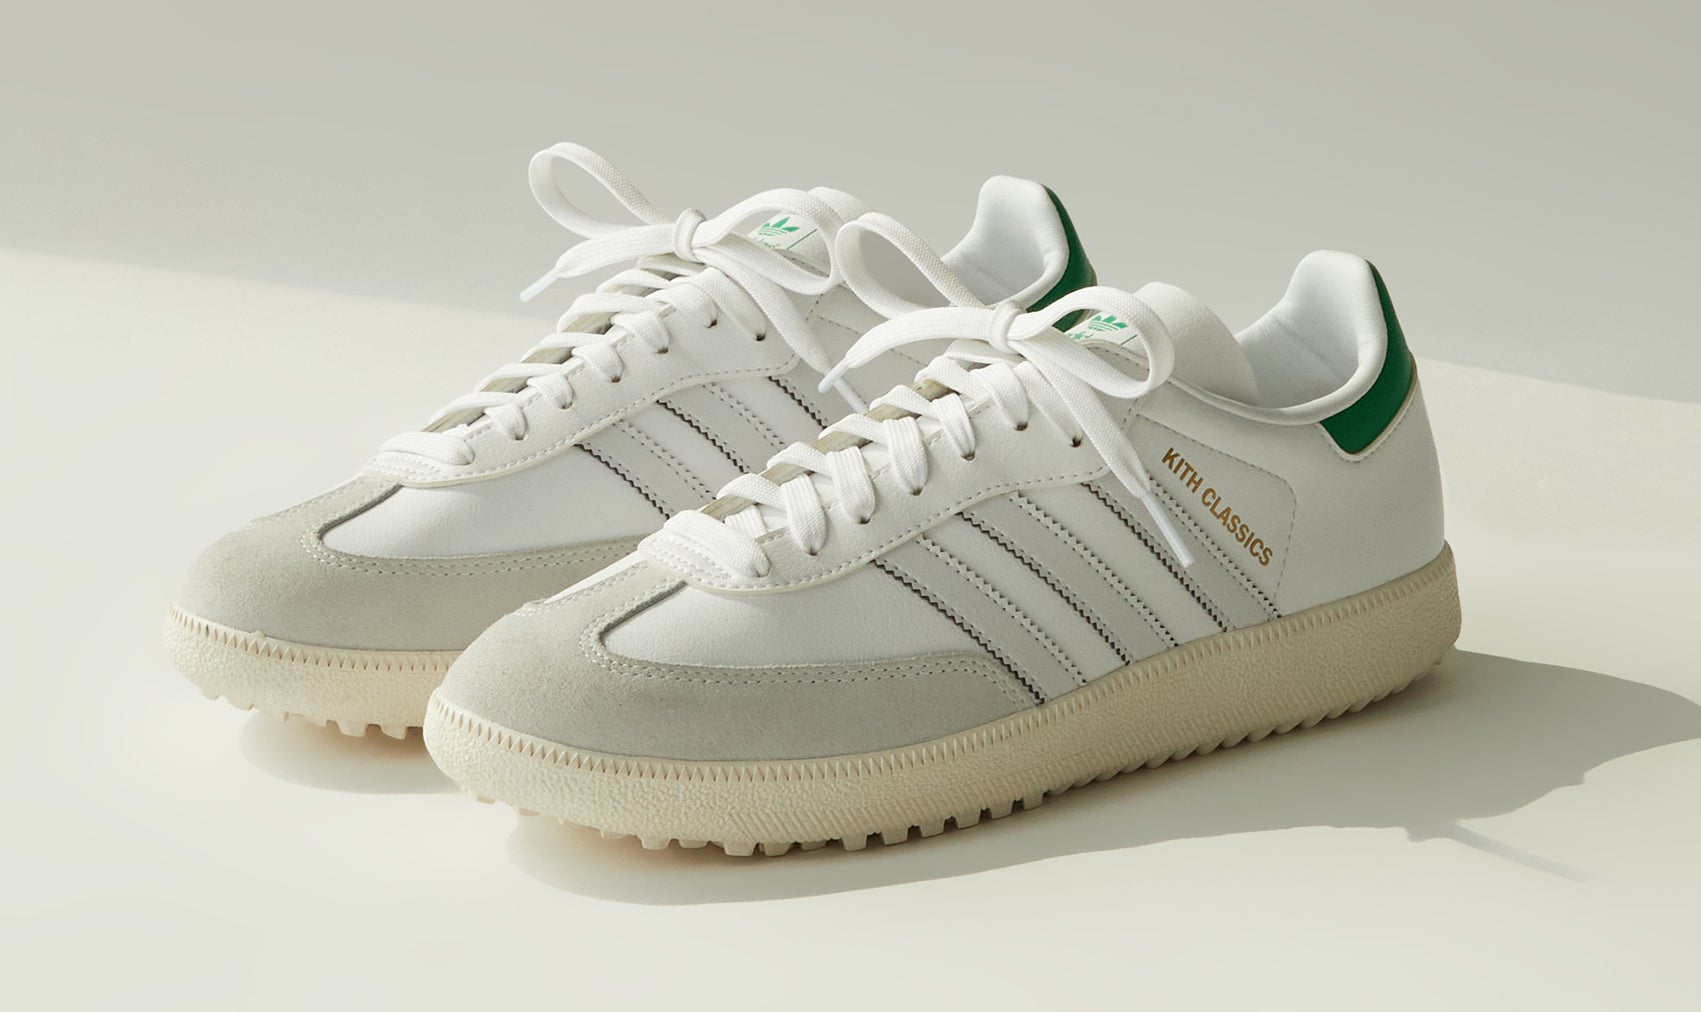 Kith x Adidas Samba Golf Shoe White Green Release Date Pair